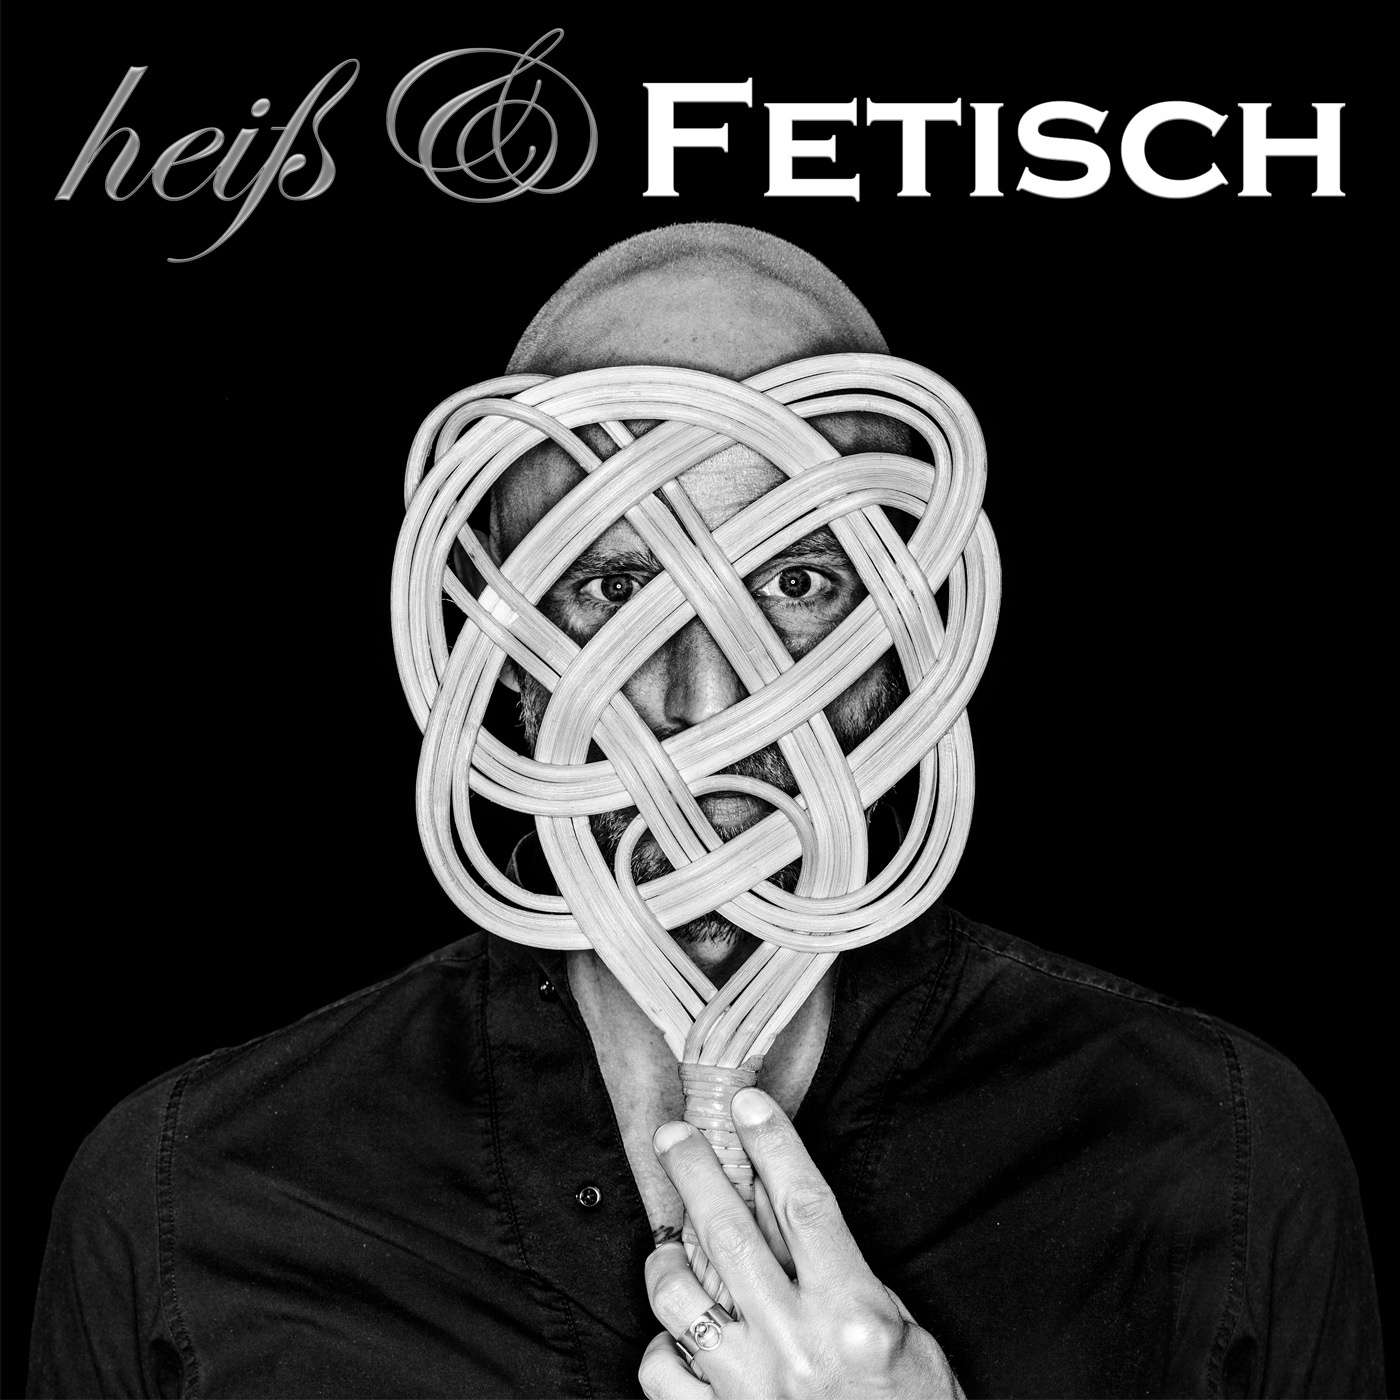 Heiß & FETISCH - Teaser